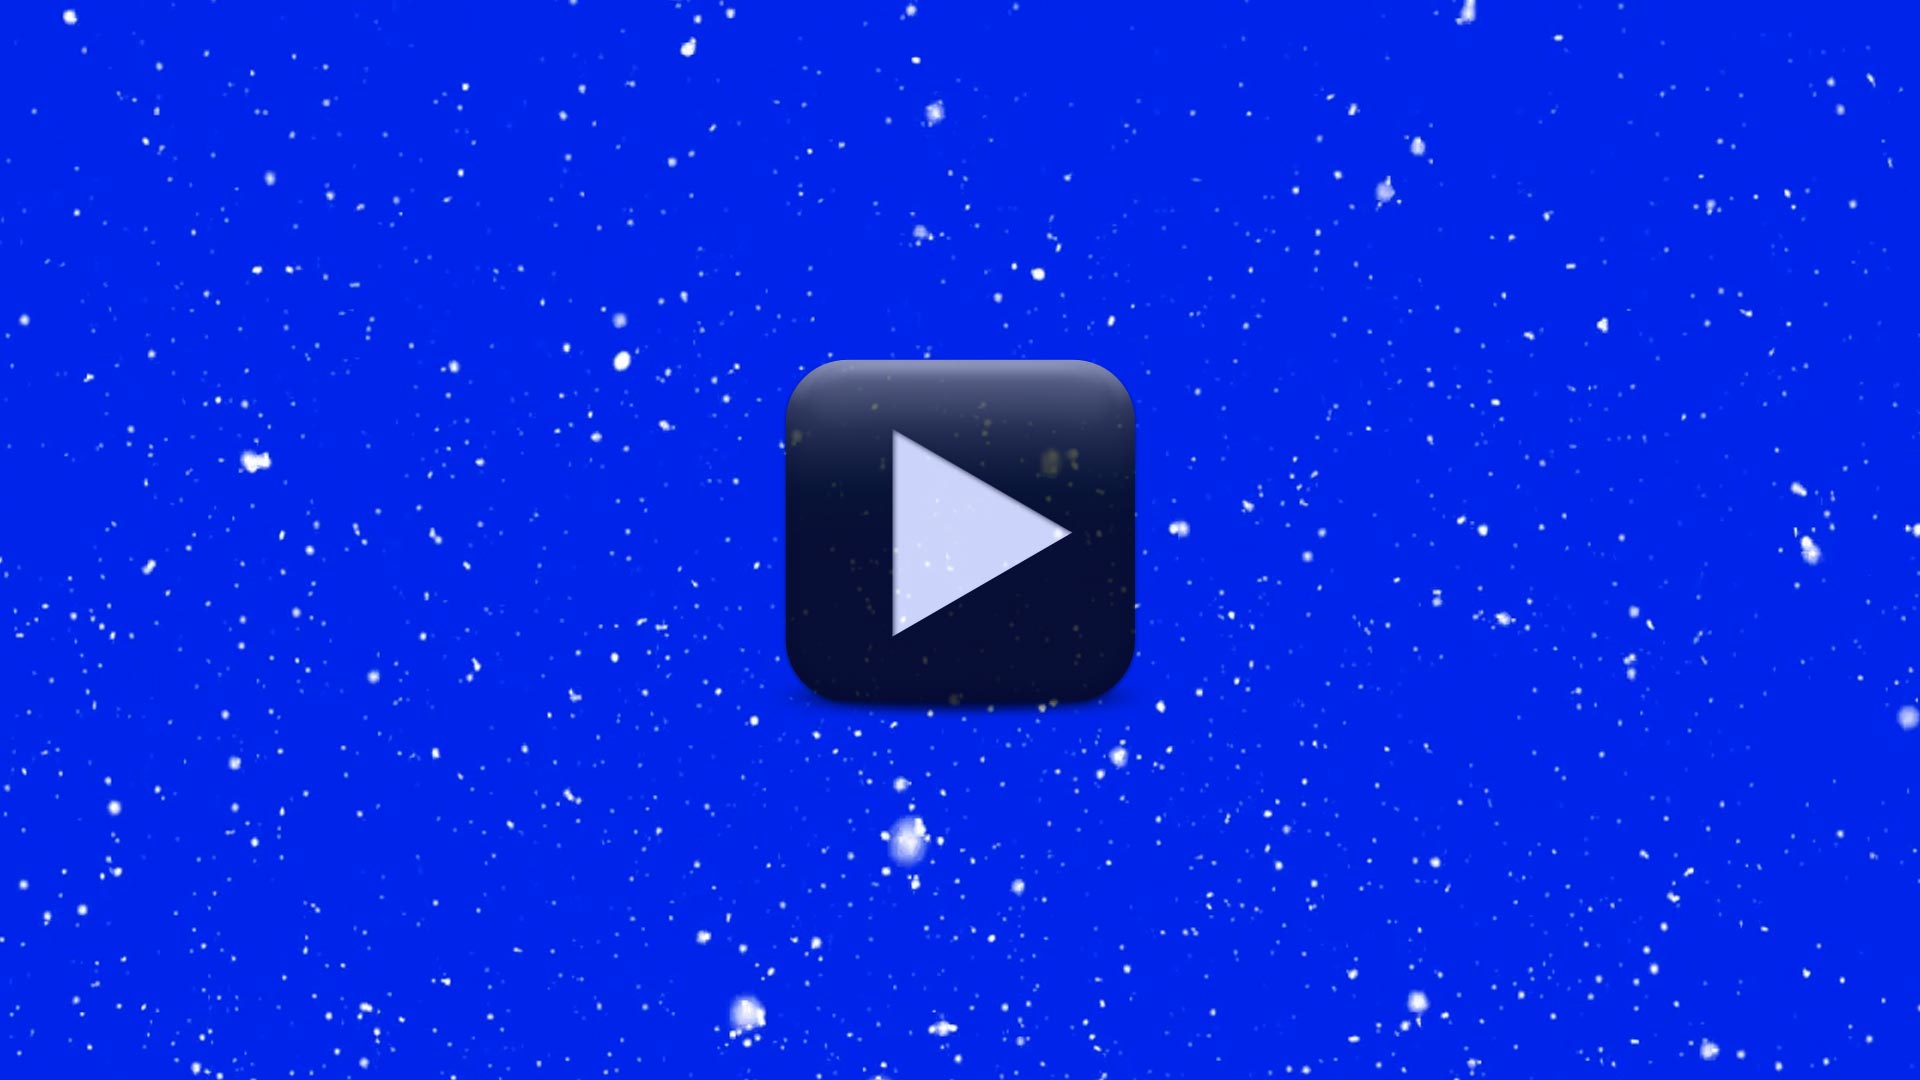 Falling snow video loop free download the great yokai war guardians download